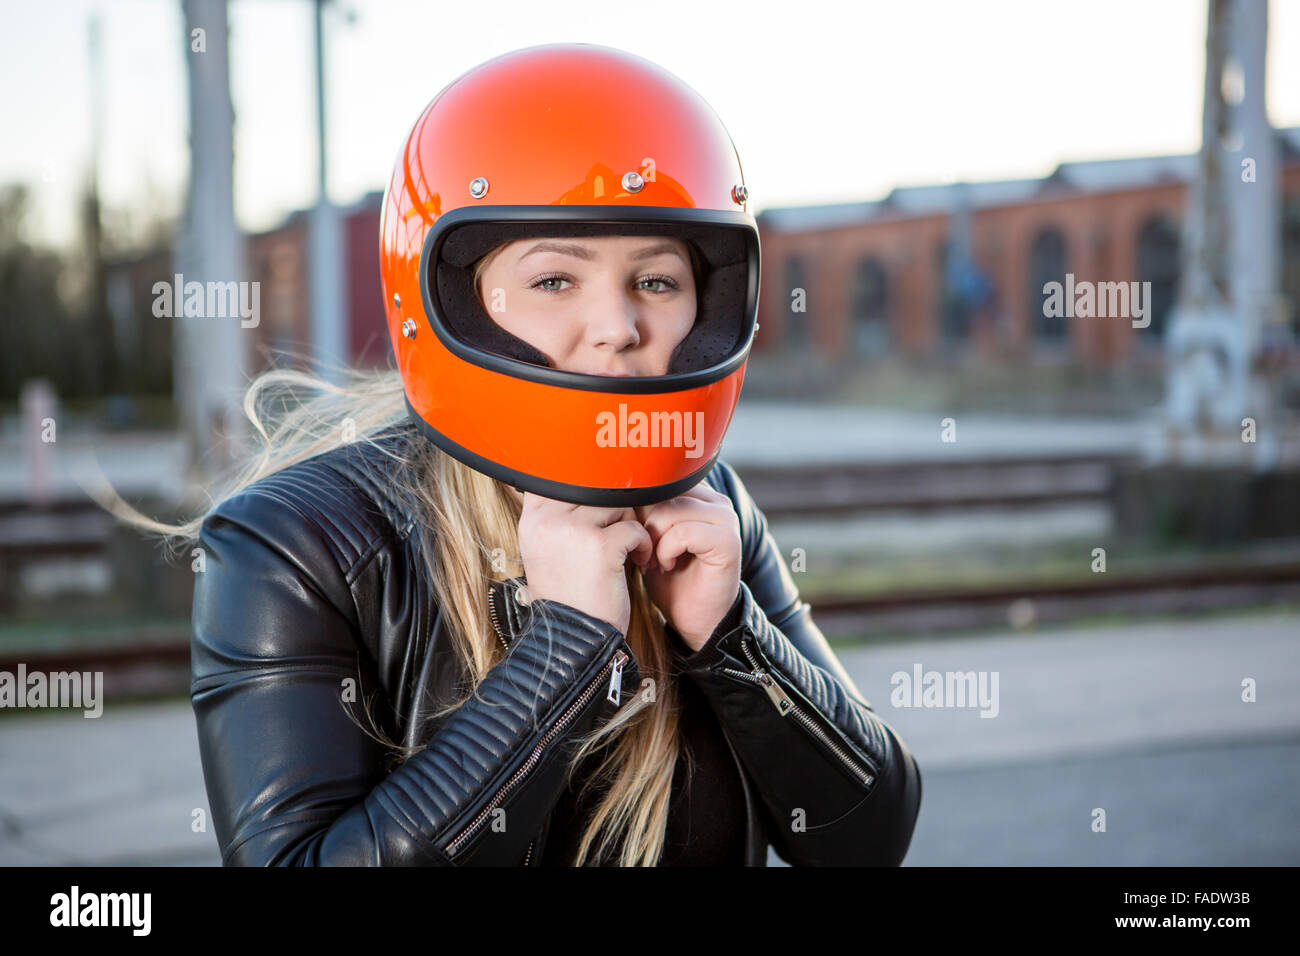 Cute girl with blond hair with orange motorcycle helmet. Outdoor, urban scene. Stock Photo